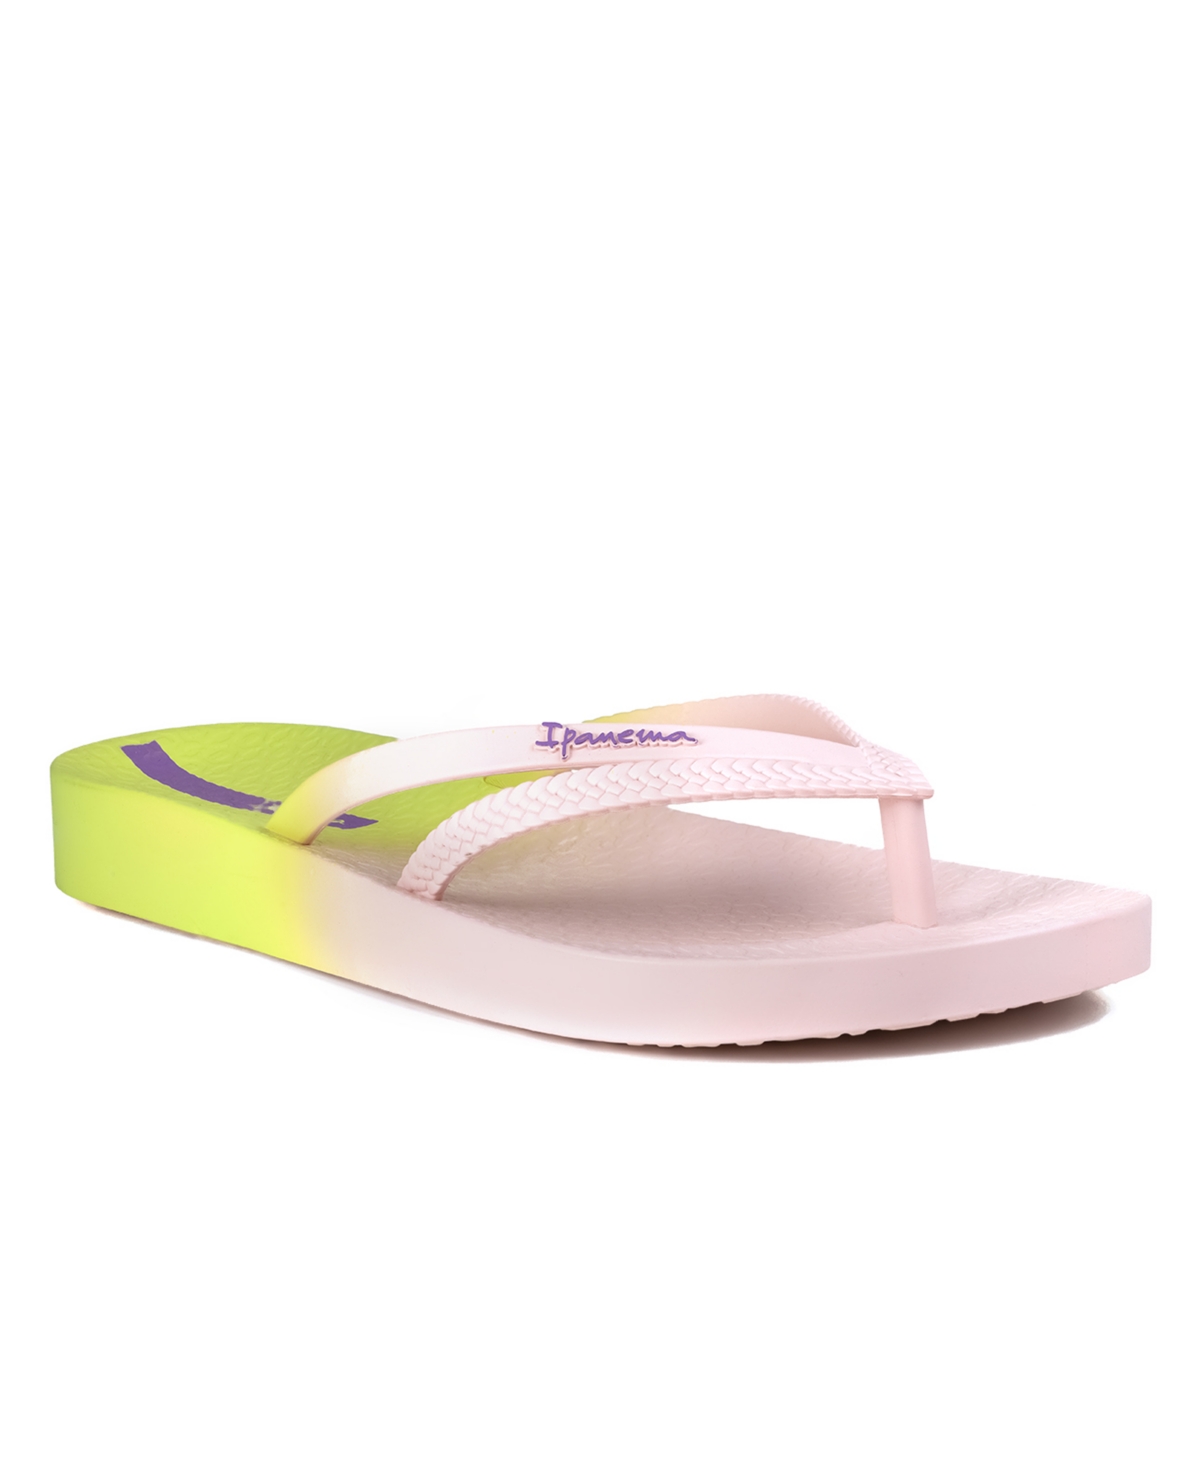 Ipanema Women's Bossa Soft Chic Flip-flop Sandals Women's Shoes In Pink/green